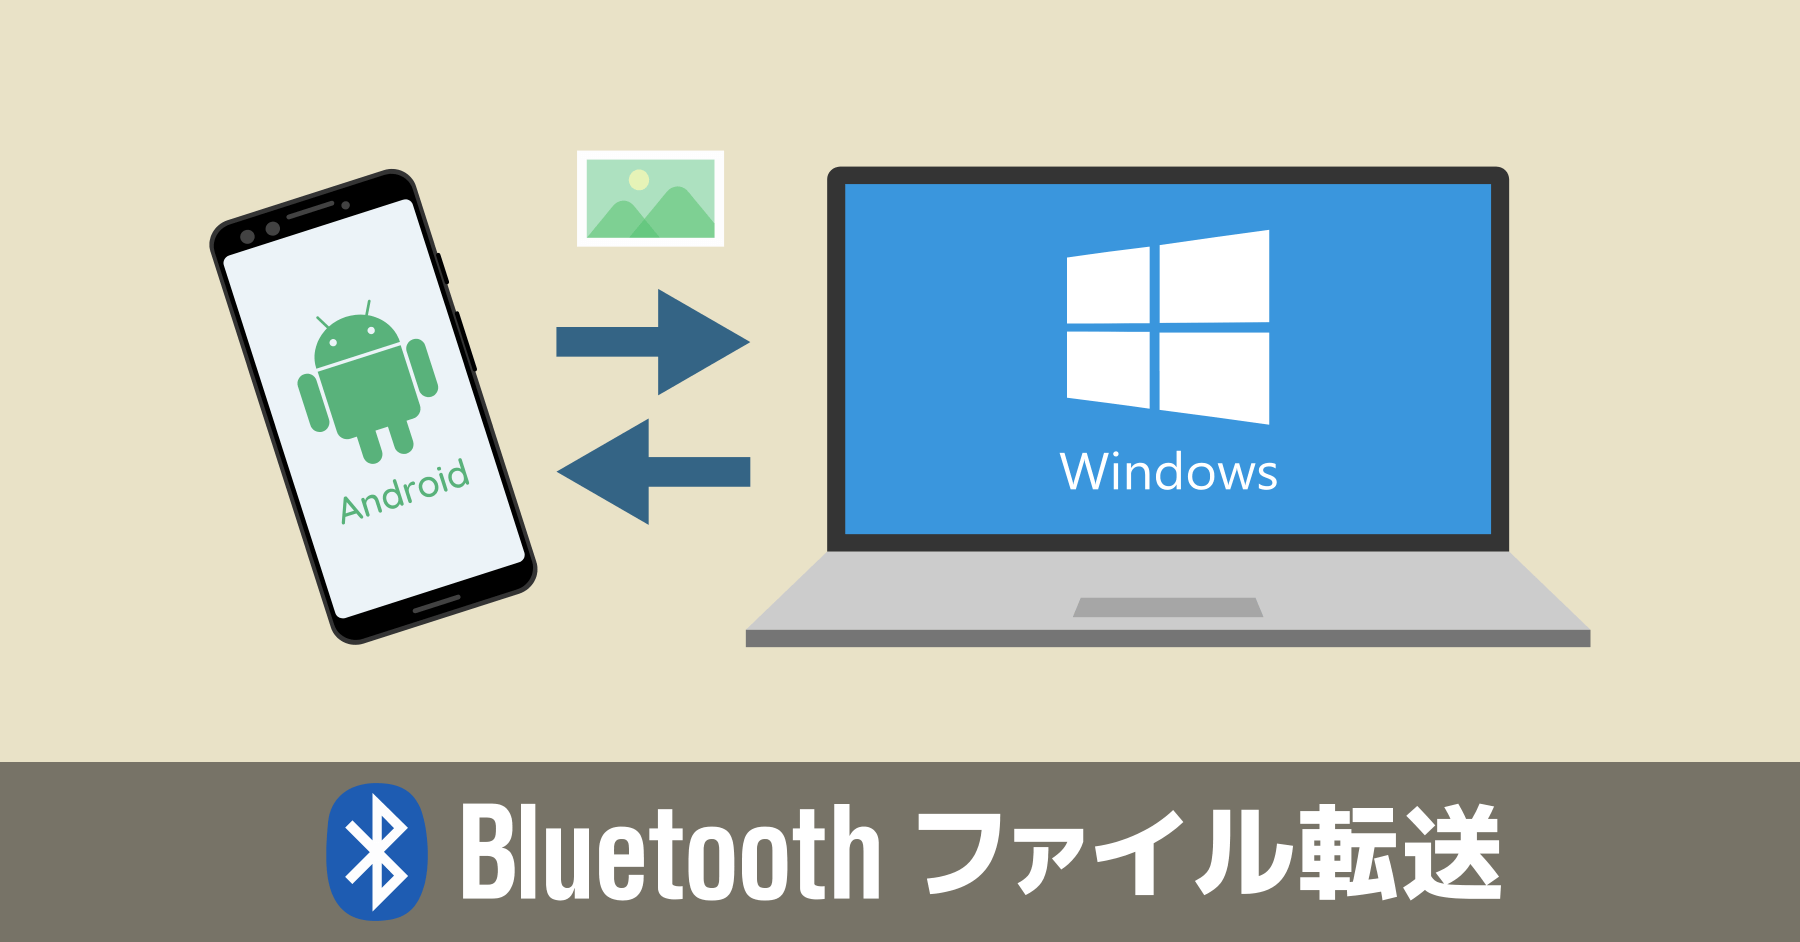 Windows と Android で Bluetooth によるファイル転送 (送信・受信) を行う方法